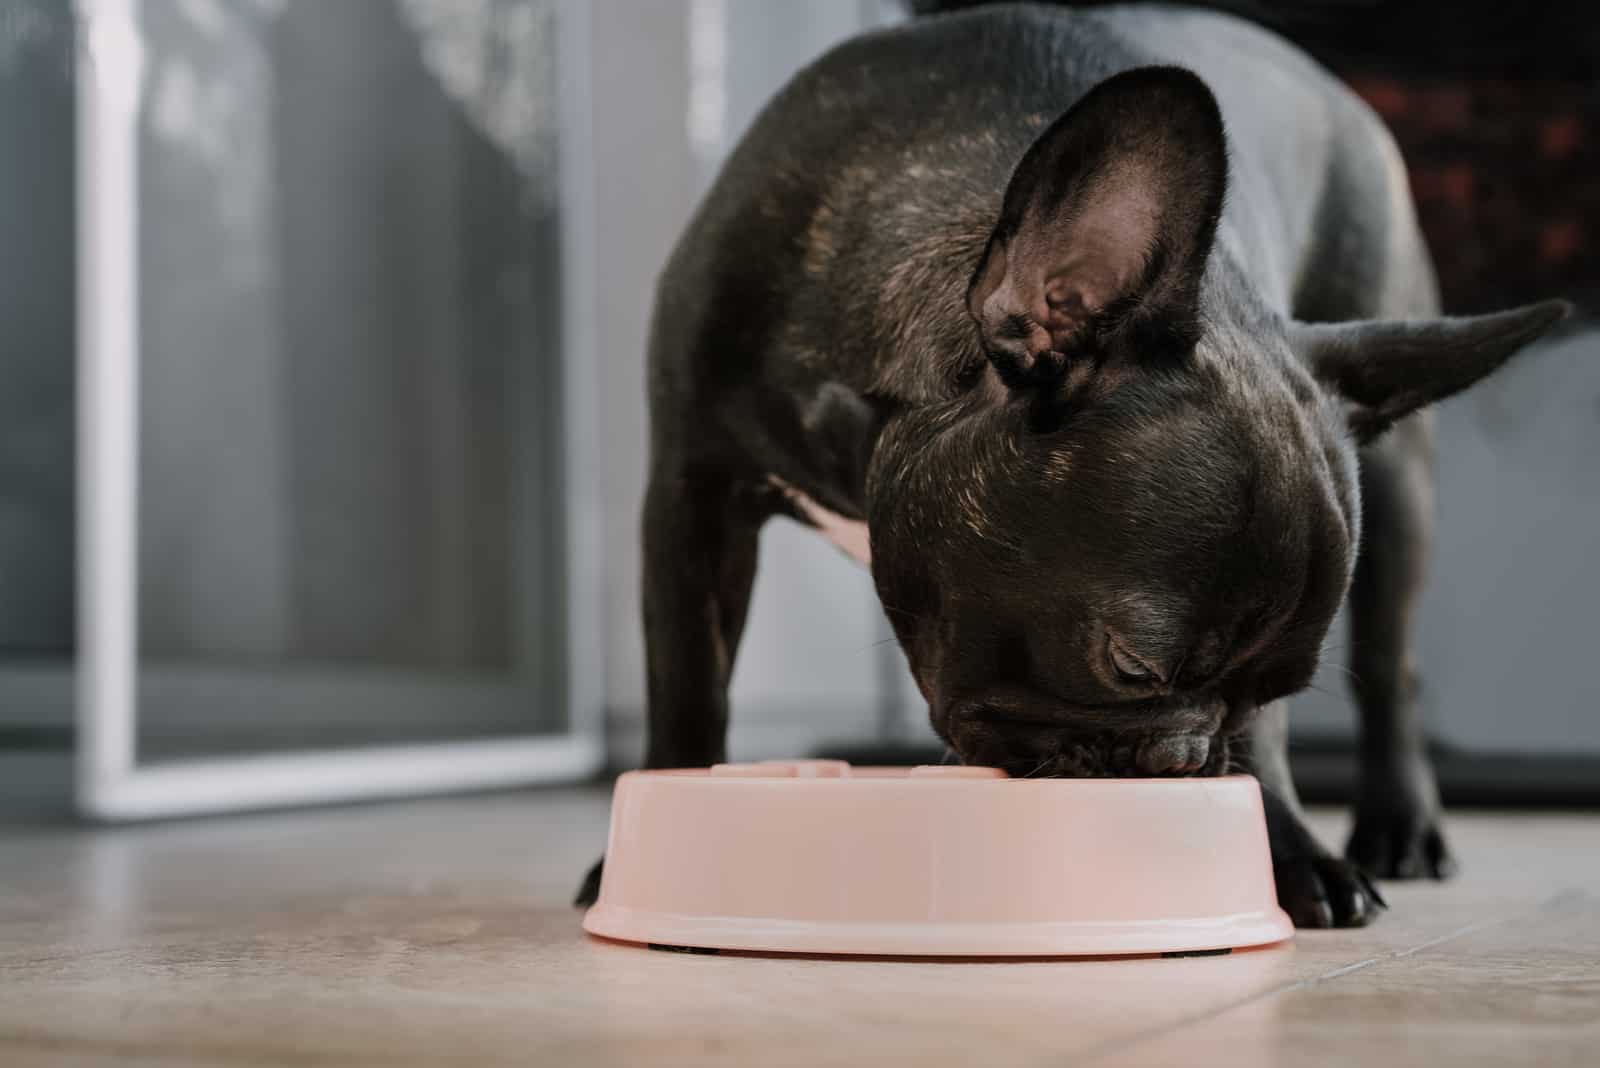 French bulldog eating from bowl